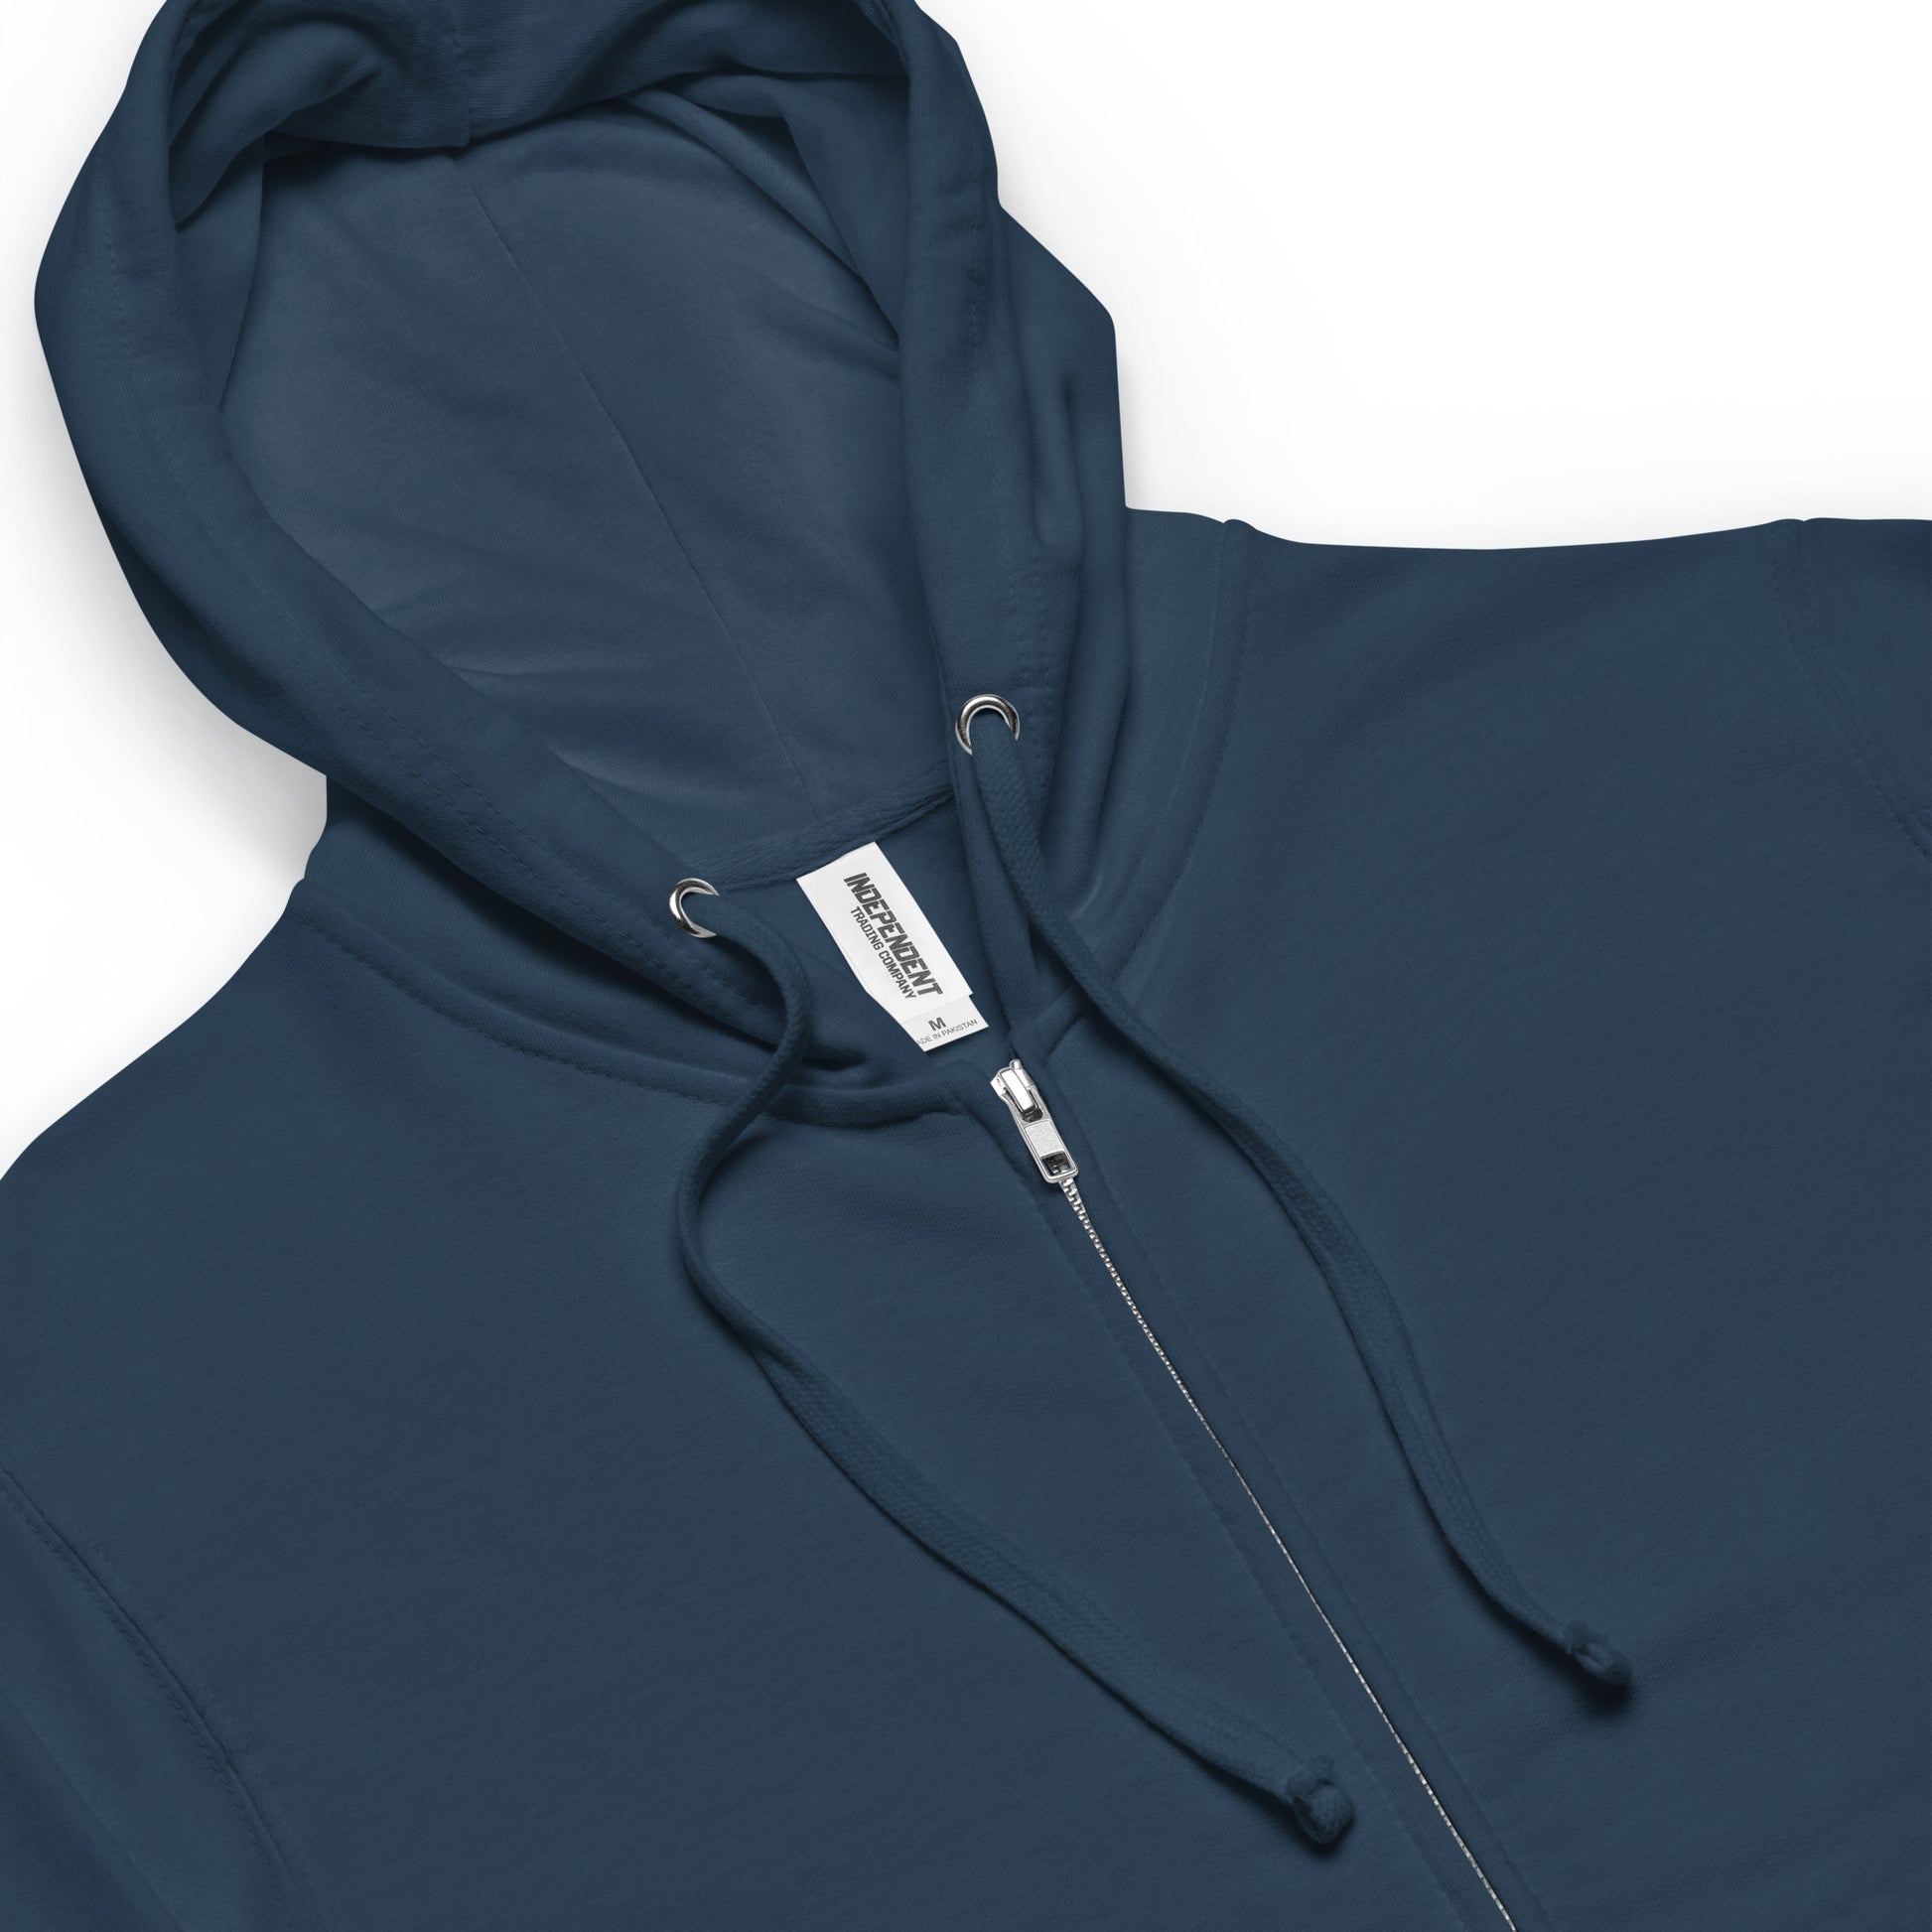 Details of unisex fleece-lined navy zip up hoodie. Image shows metal zipper, metal eyelets, matching cords, jersey-lined hood.